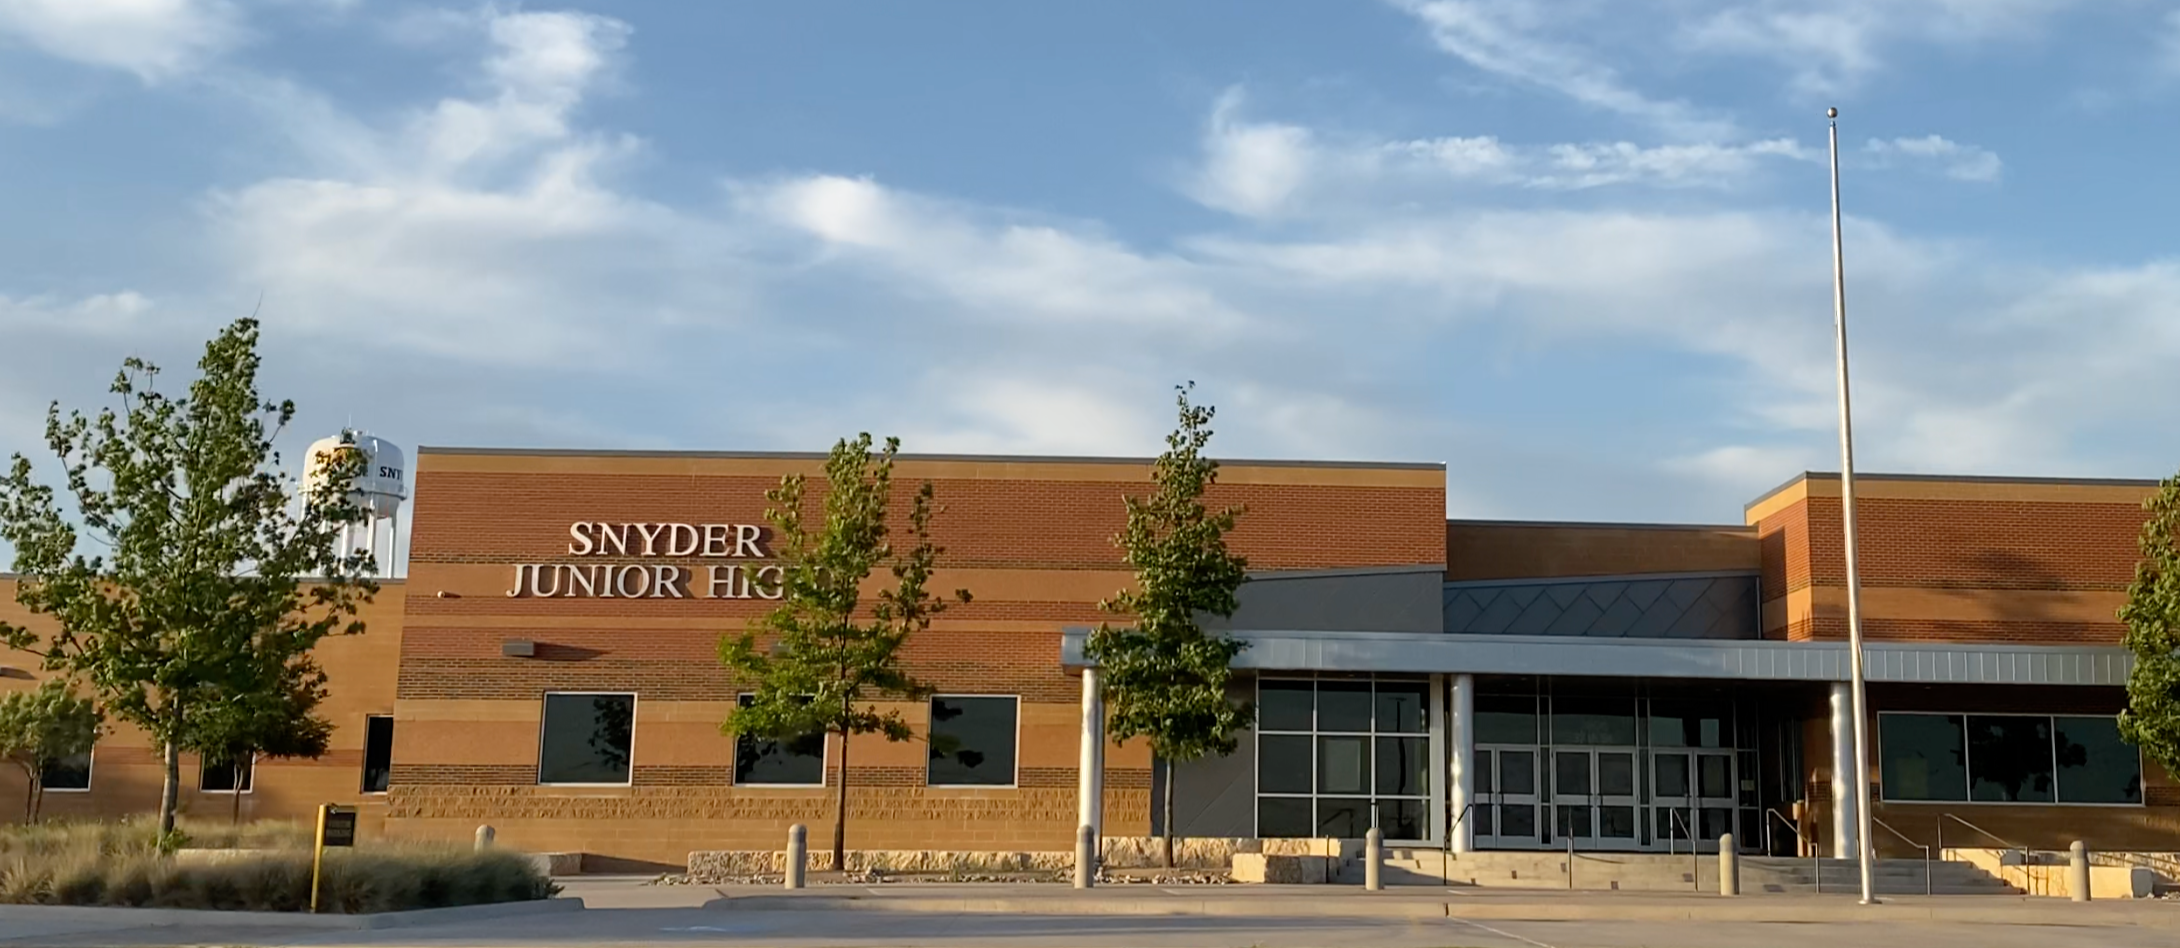 Snyder Junior High 3806 37th, Snyder, TX 